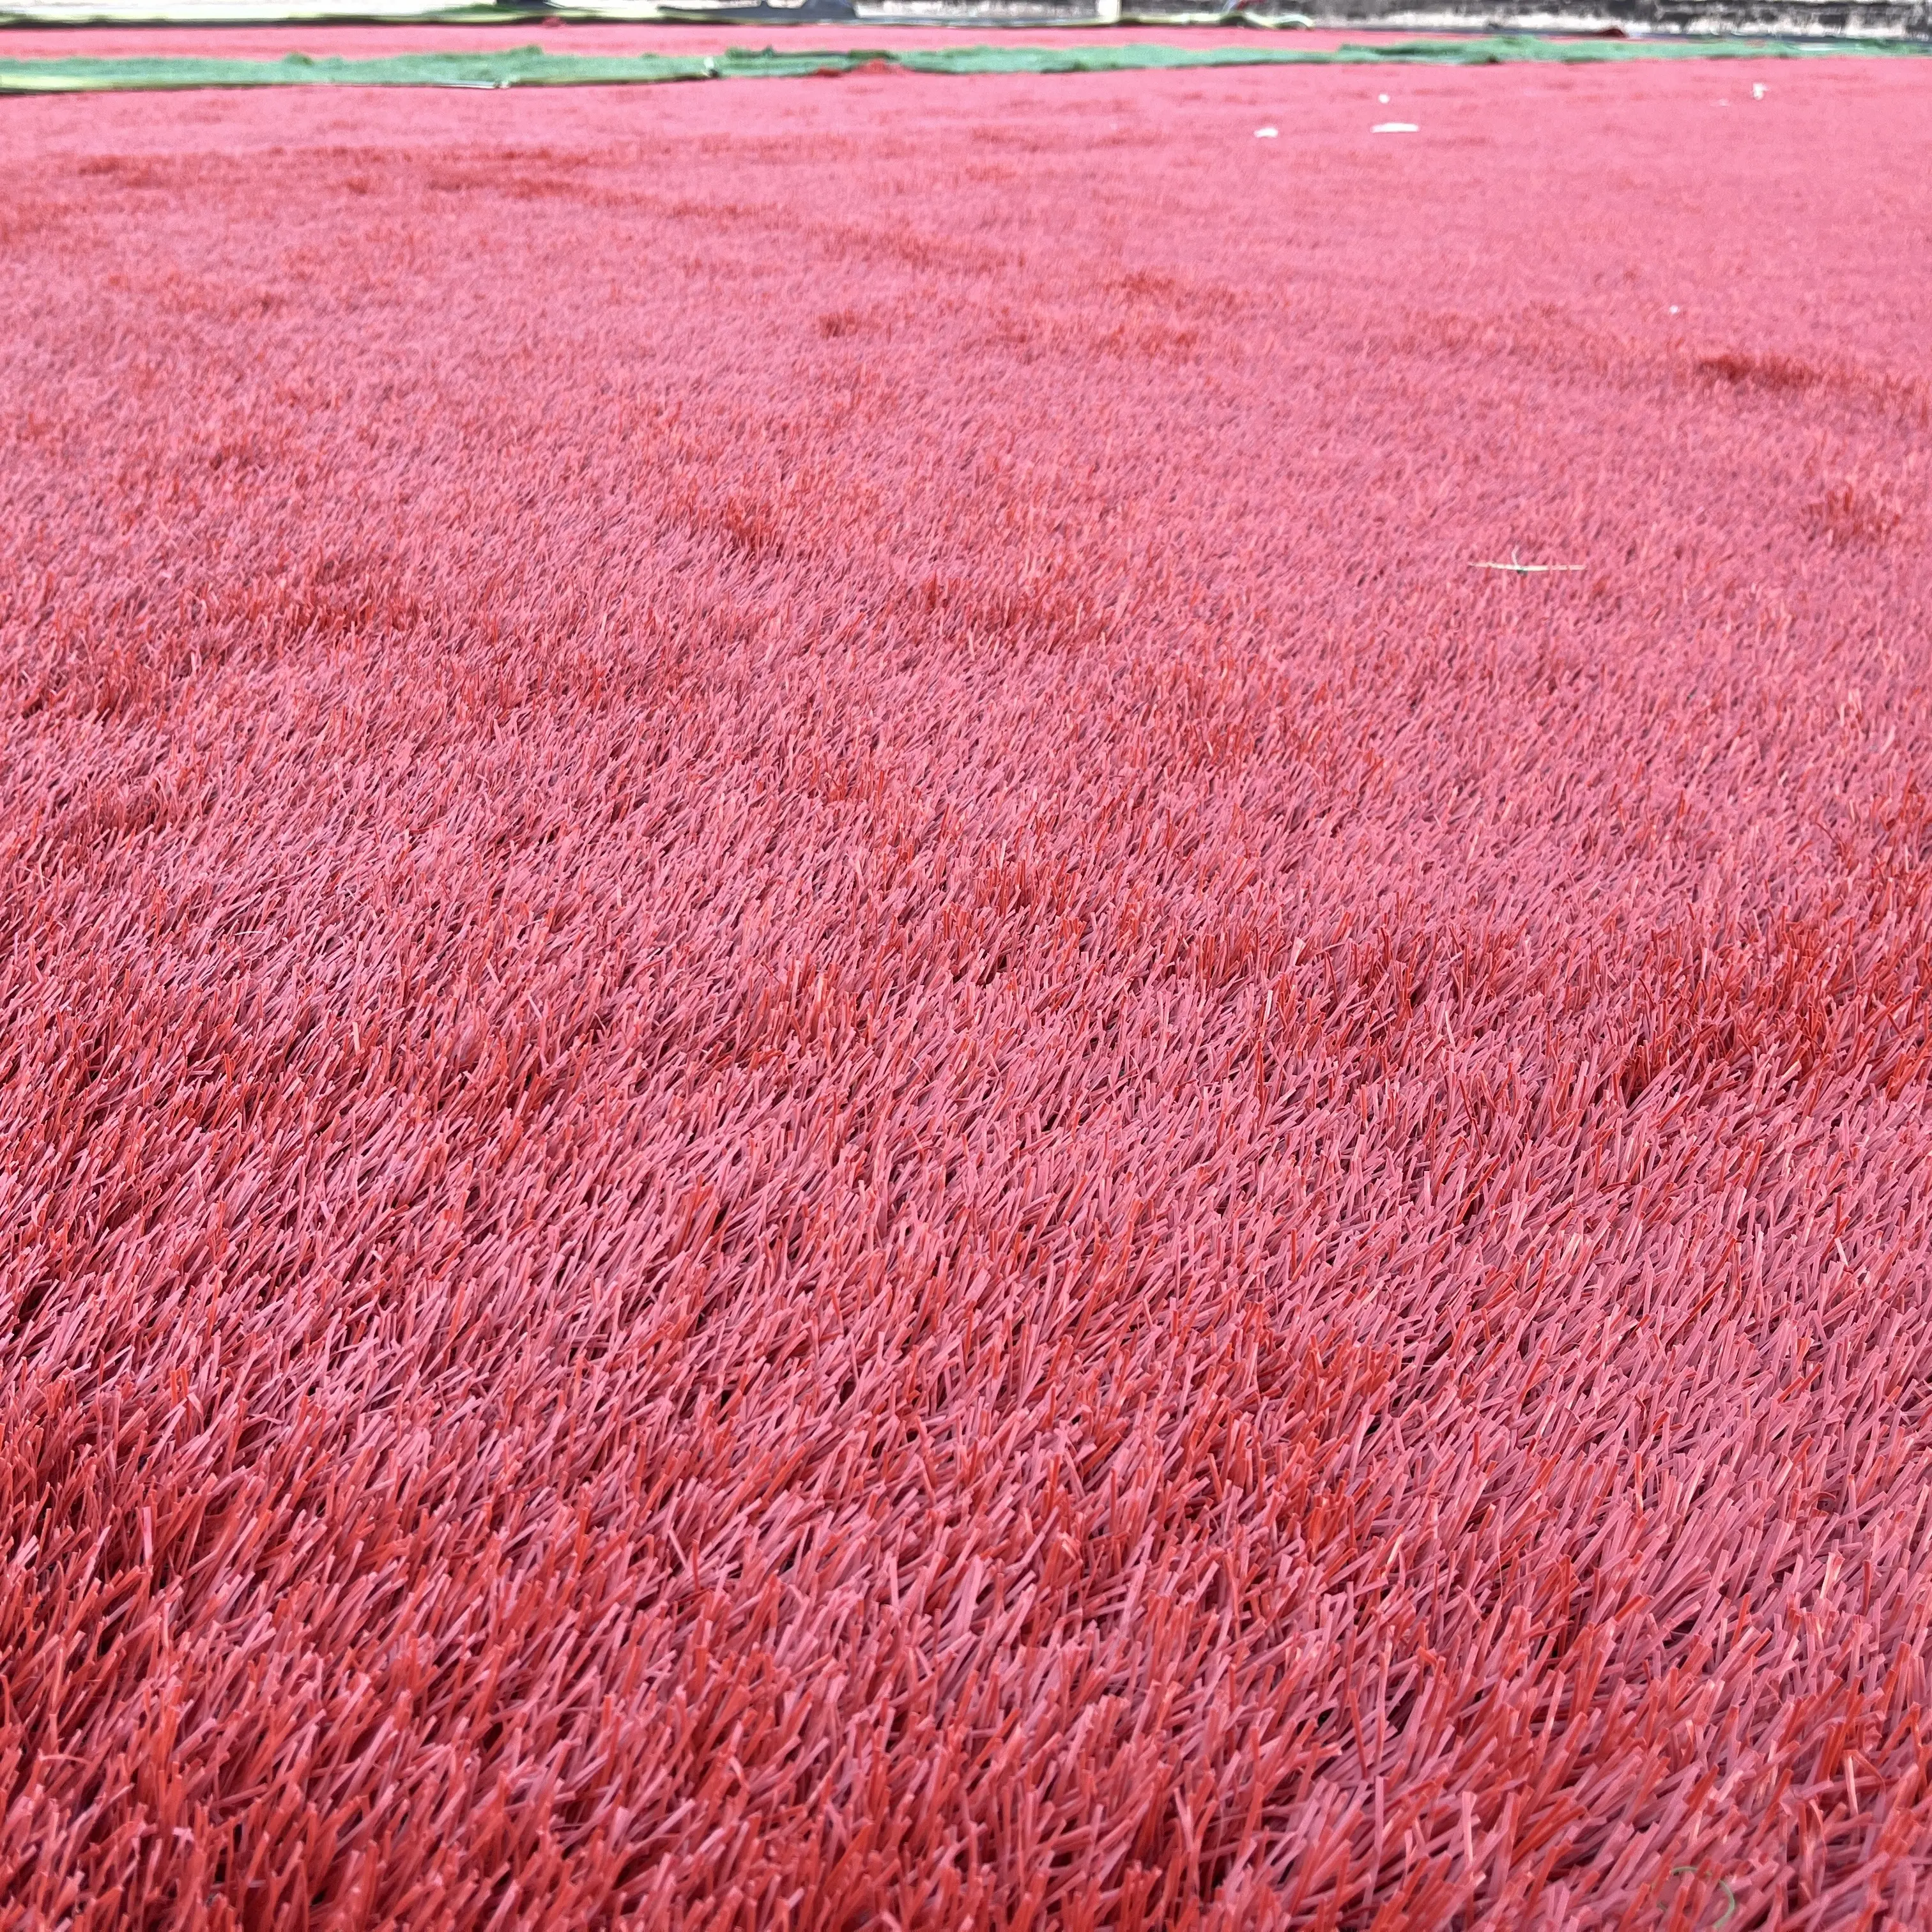 Defalarca temizlenmiş yapay çim spor döşeme ilkbahar ve sonbahar 30-50mm yapay çim iyi suni çim çim